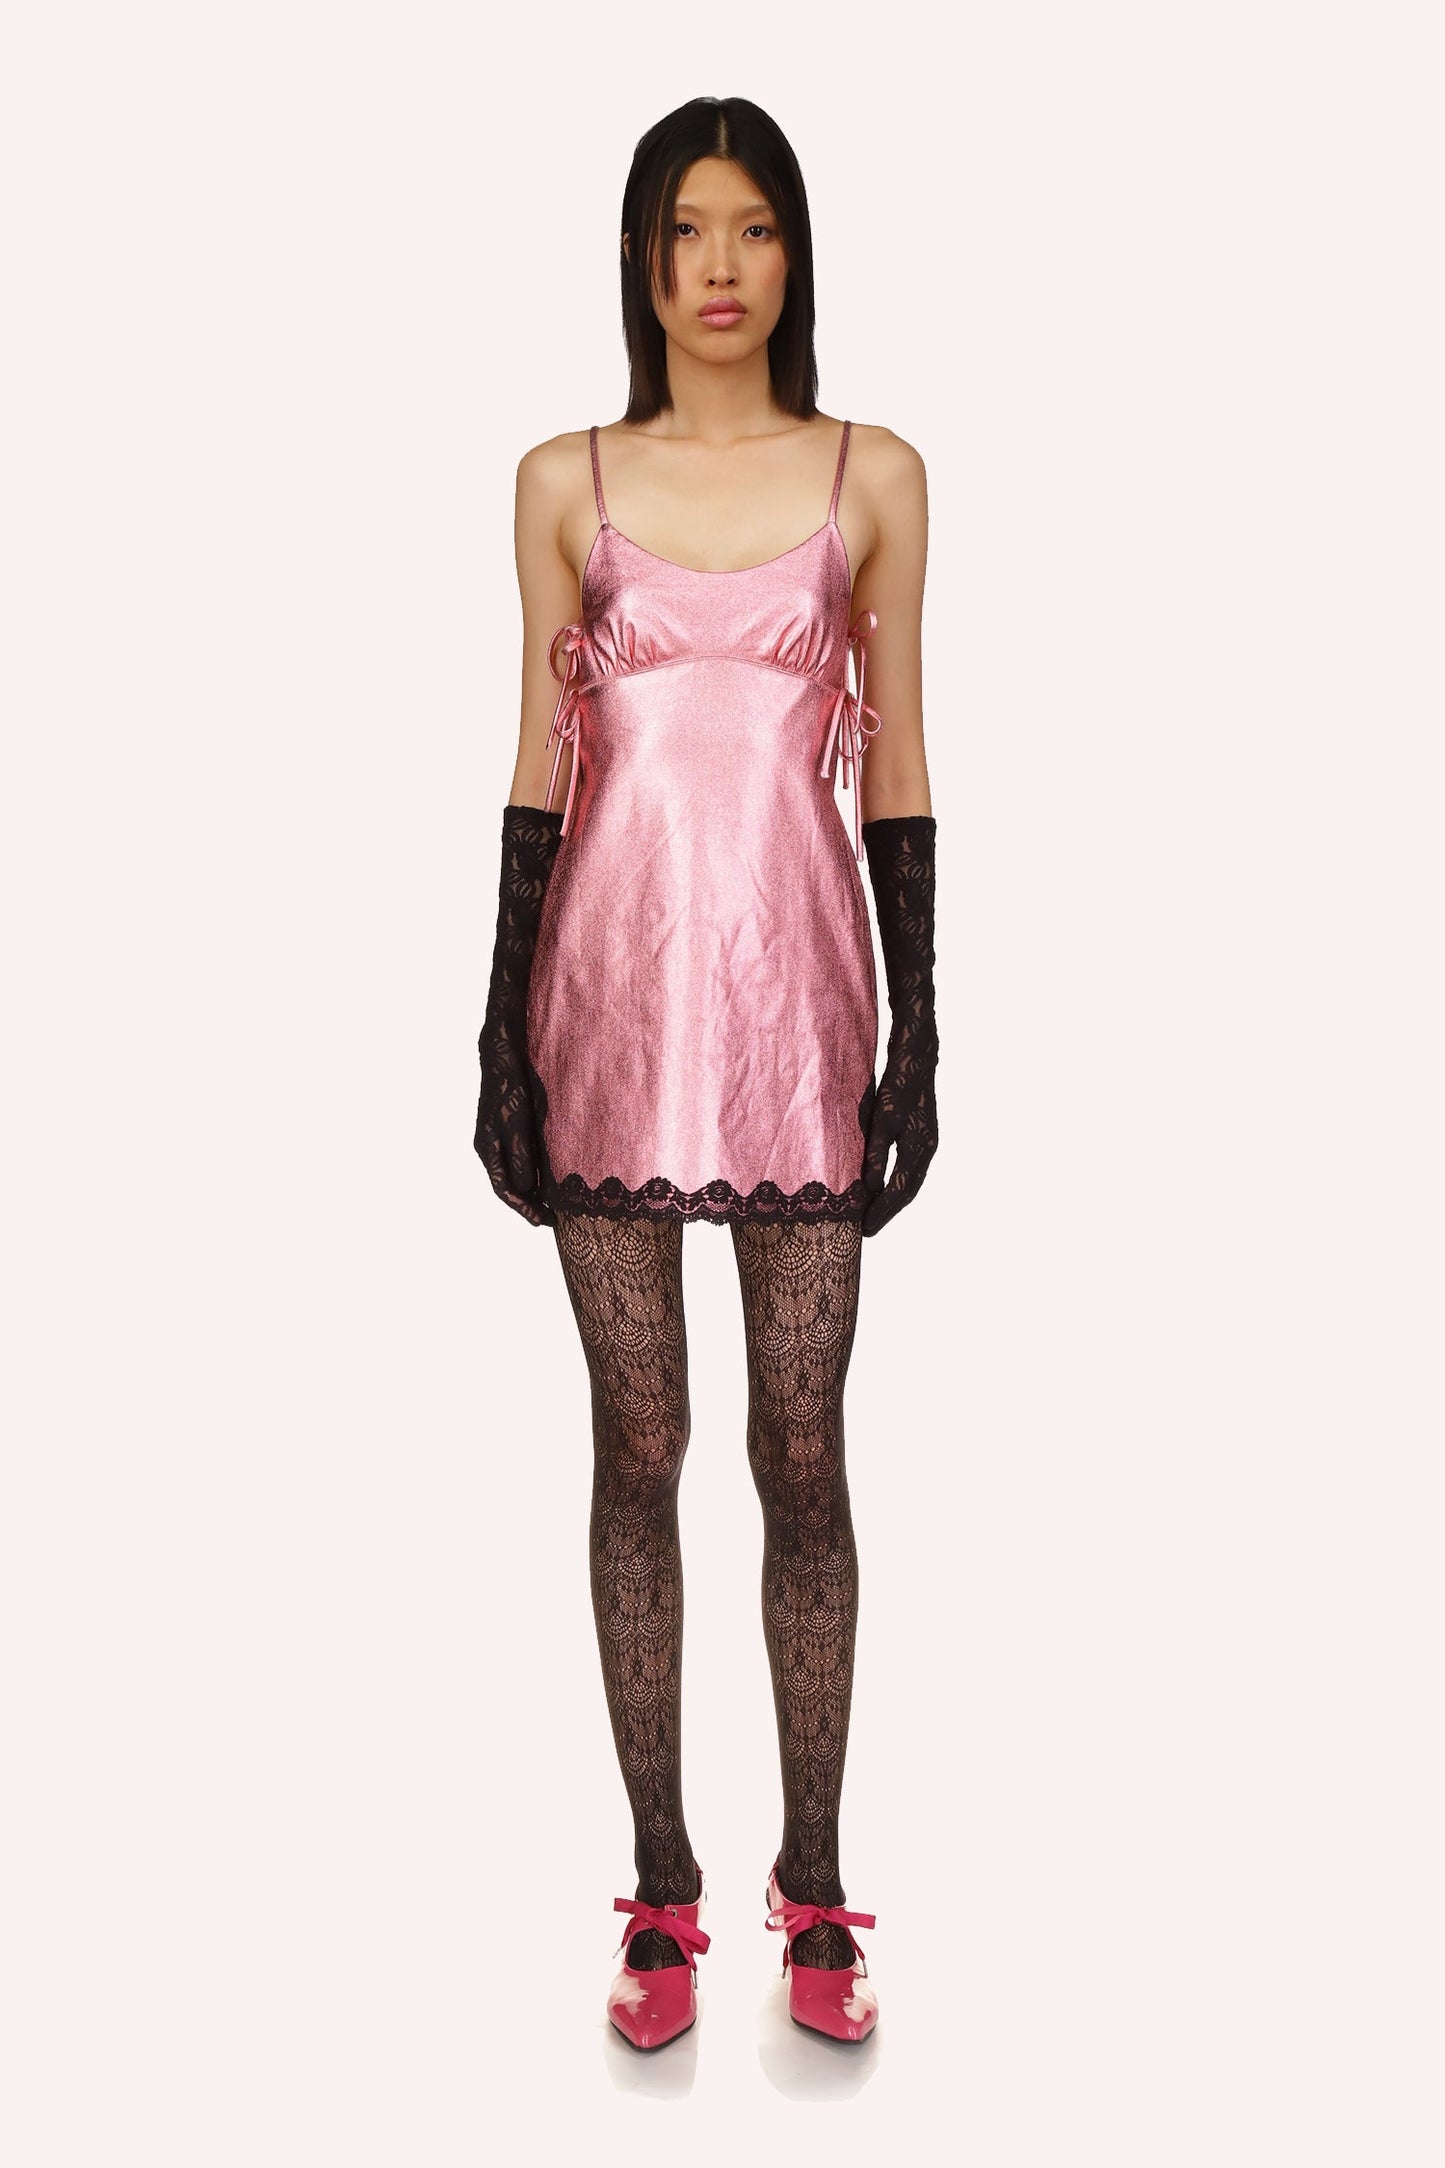 Bubblegum, sleeveless, 2-straps, wavy black lace at bottom, pink grommets to adjust